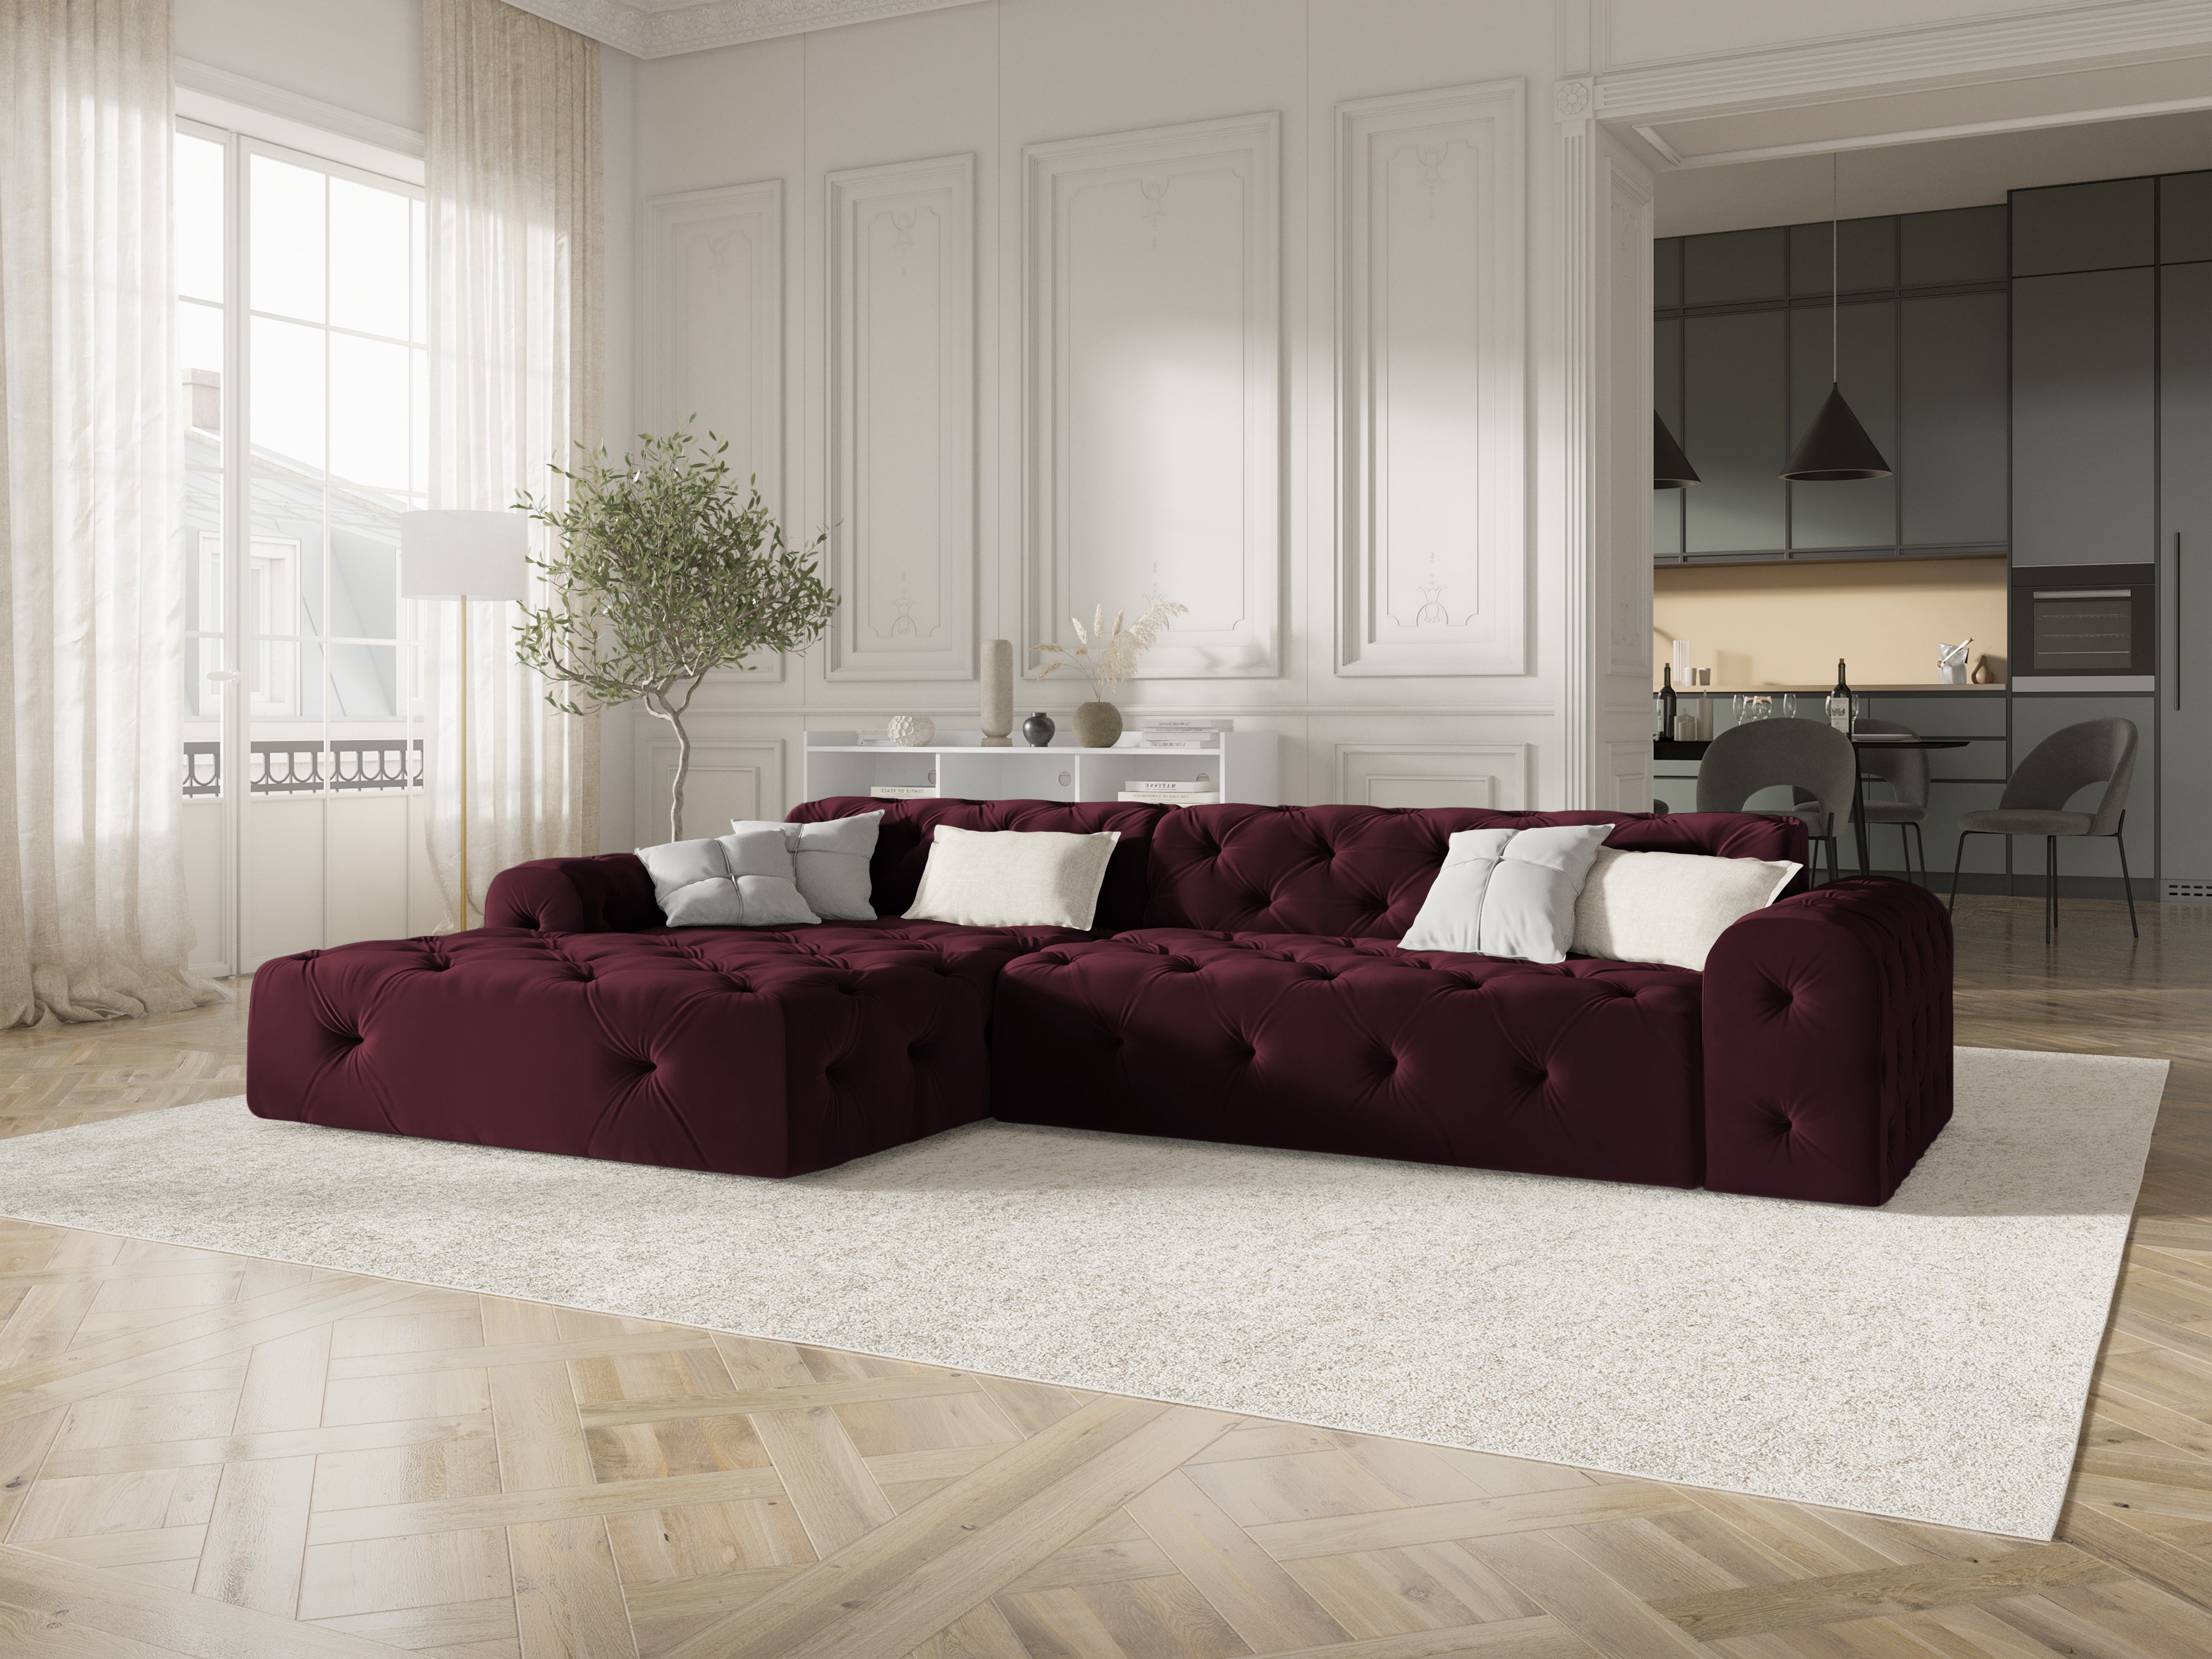 Velvet Left Corner Sofa, "Candice", 4 Seats, 260x170x80
Made in Europe, Micadoni, Eye on Design